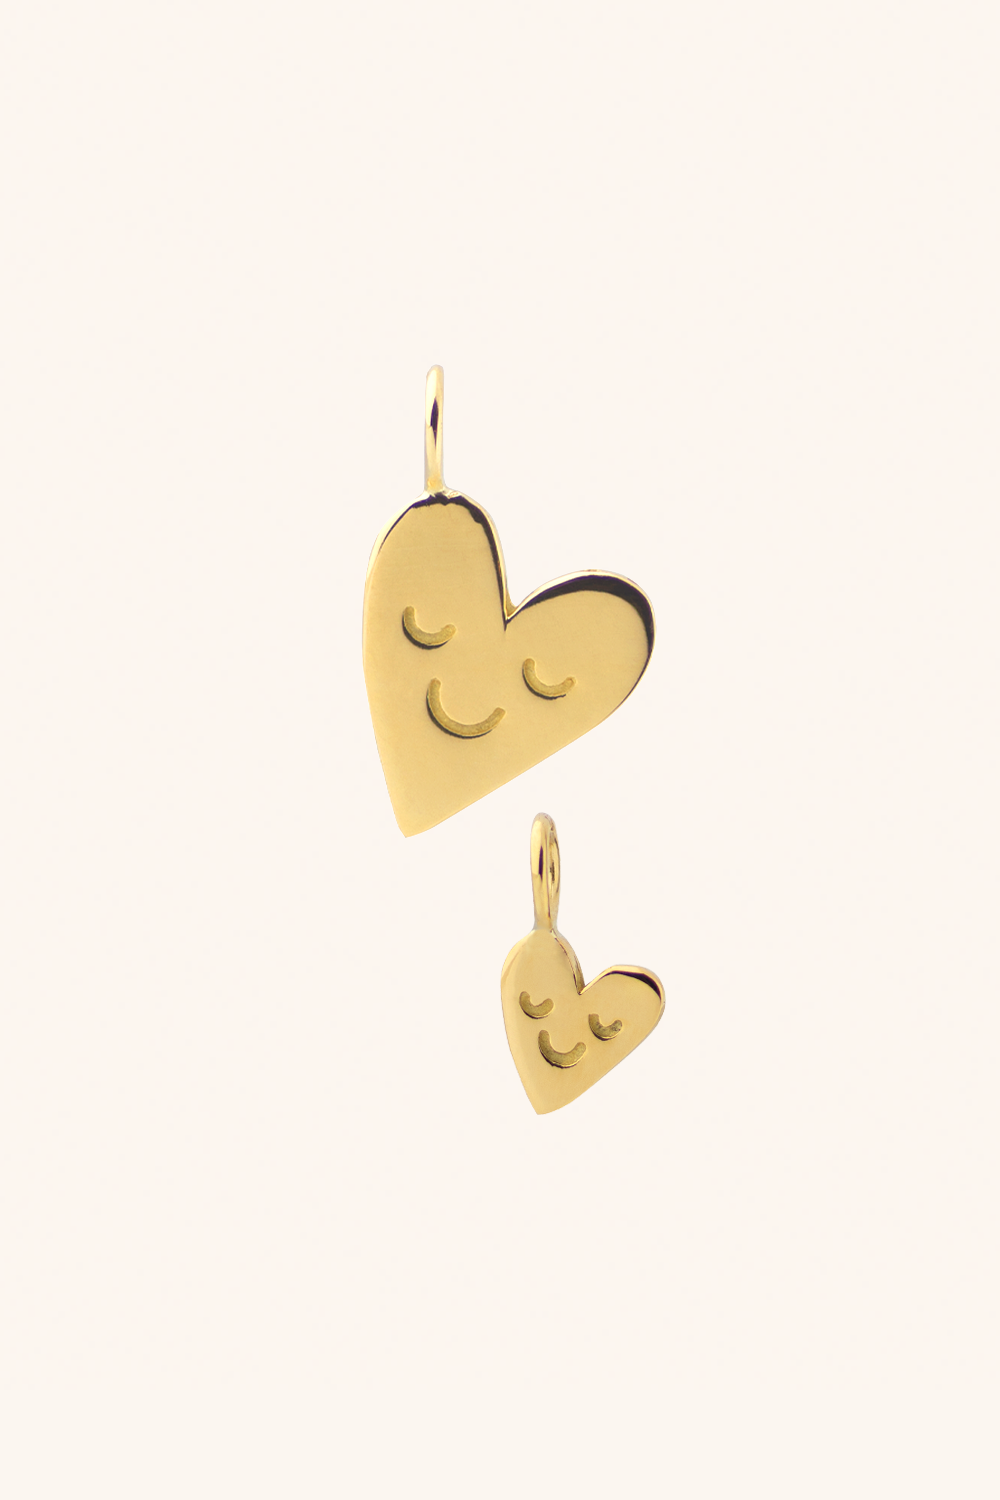 The Fine Gold Mini Mood Heart Charm